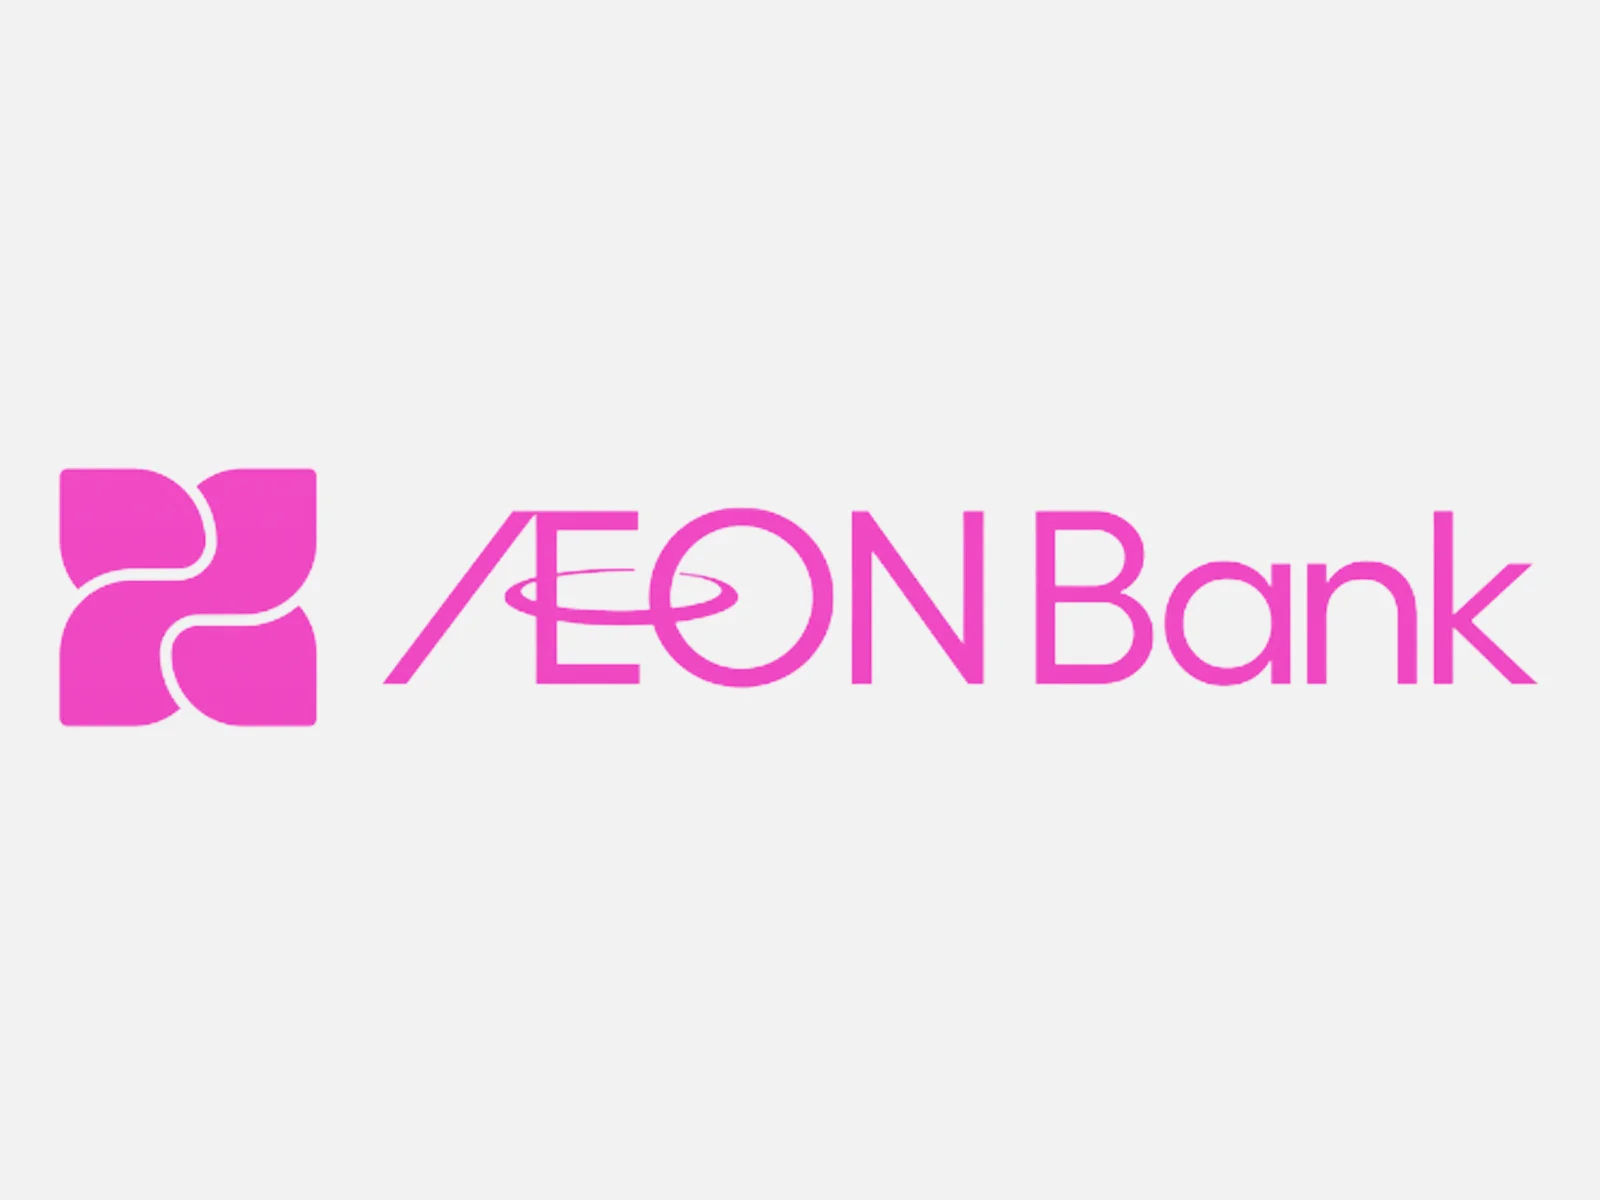 aeon bank digital bank